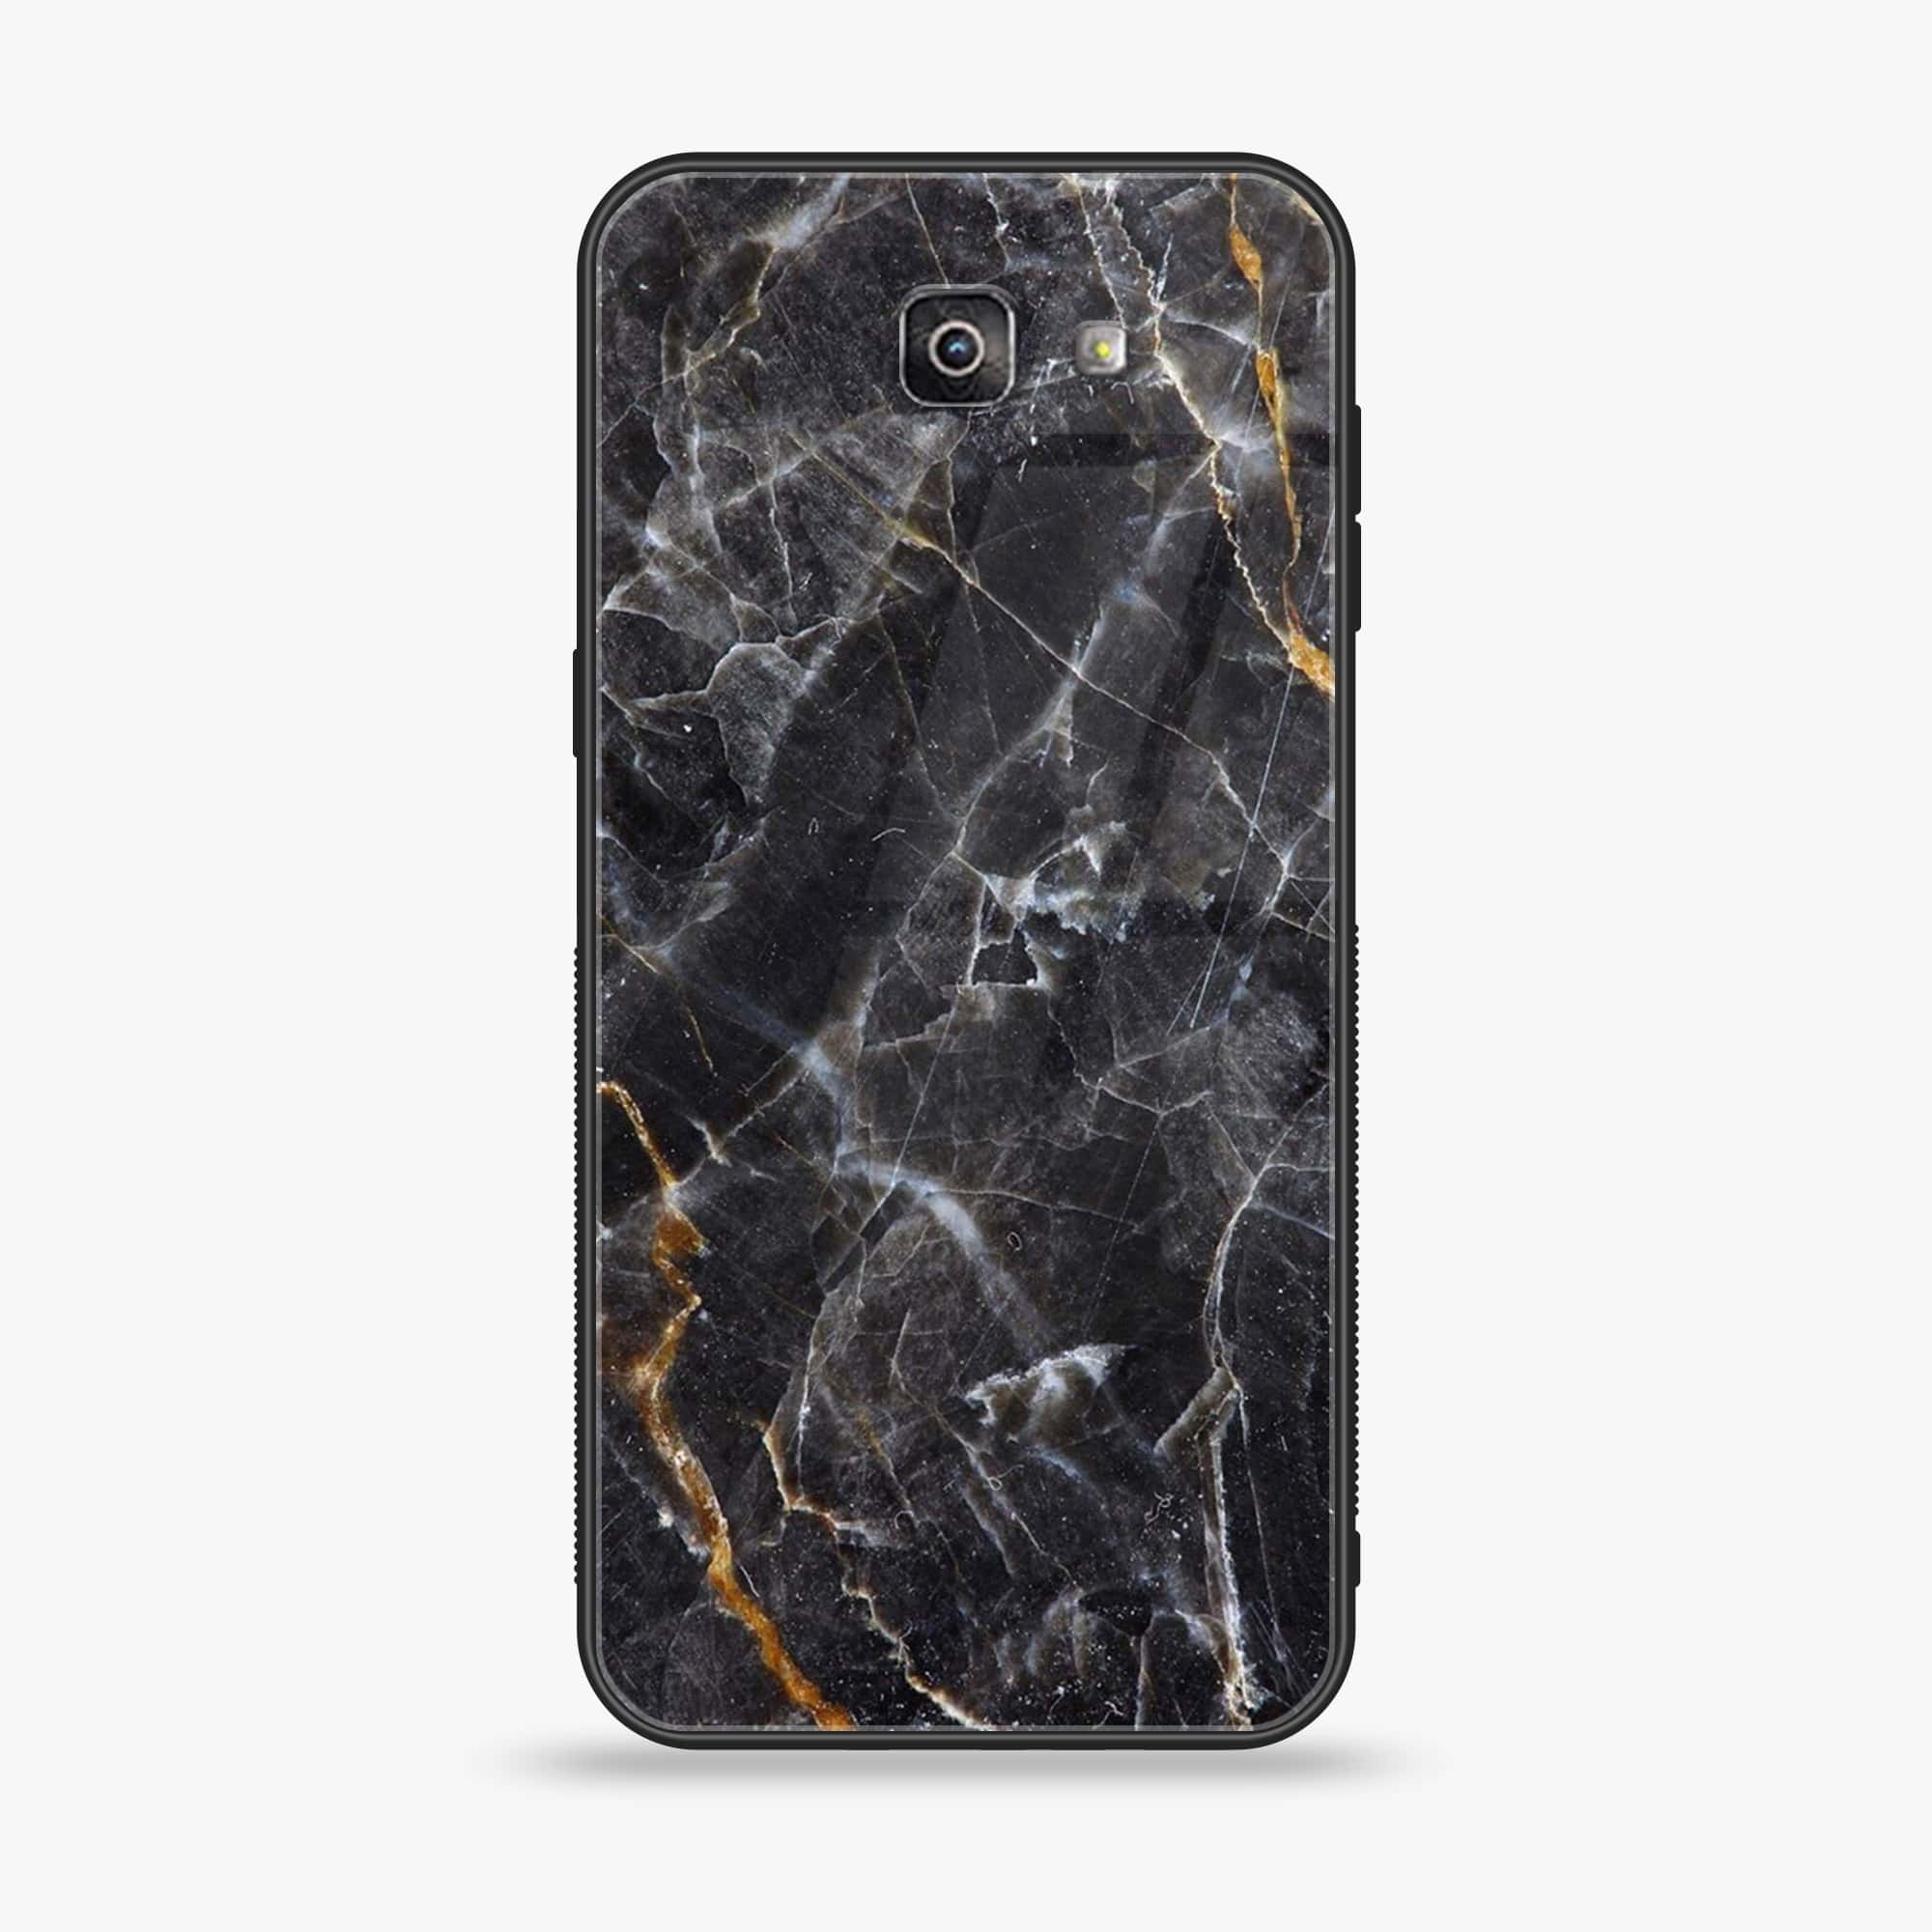 Galaxy J7 Prime 2018 - Black Marble 2.0 Series - Premium Printed Glass soft Bumper shock Proof Case